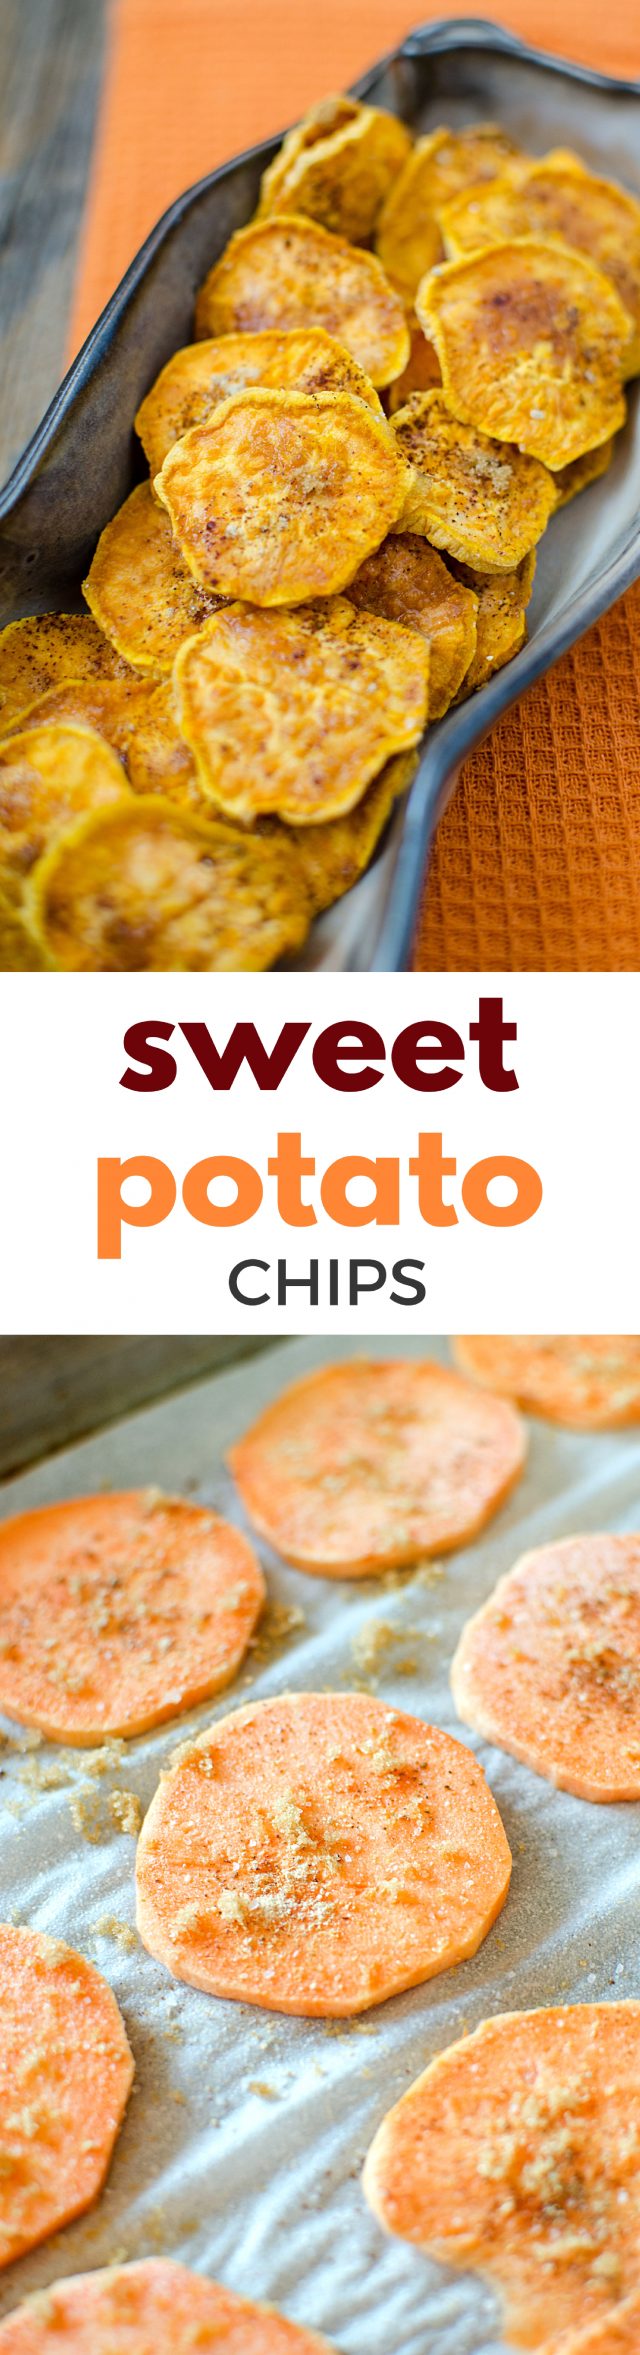 Warm Cinnamon Brown Sugar Sweet Potato Chips Recipe